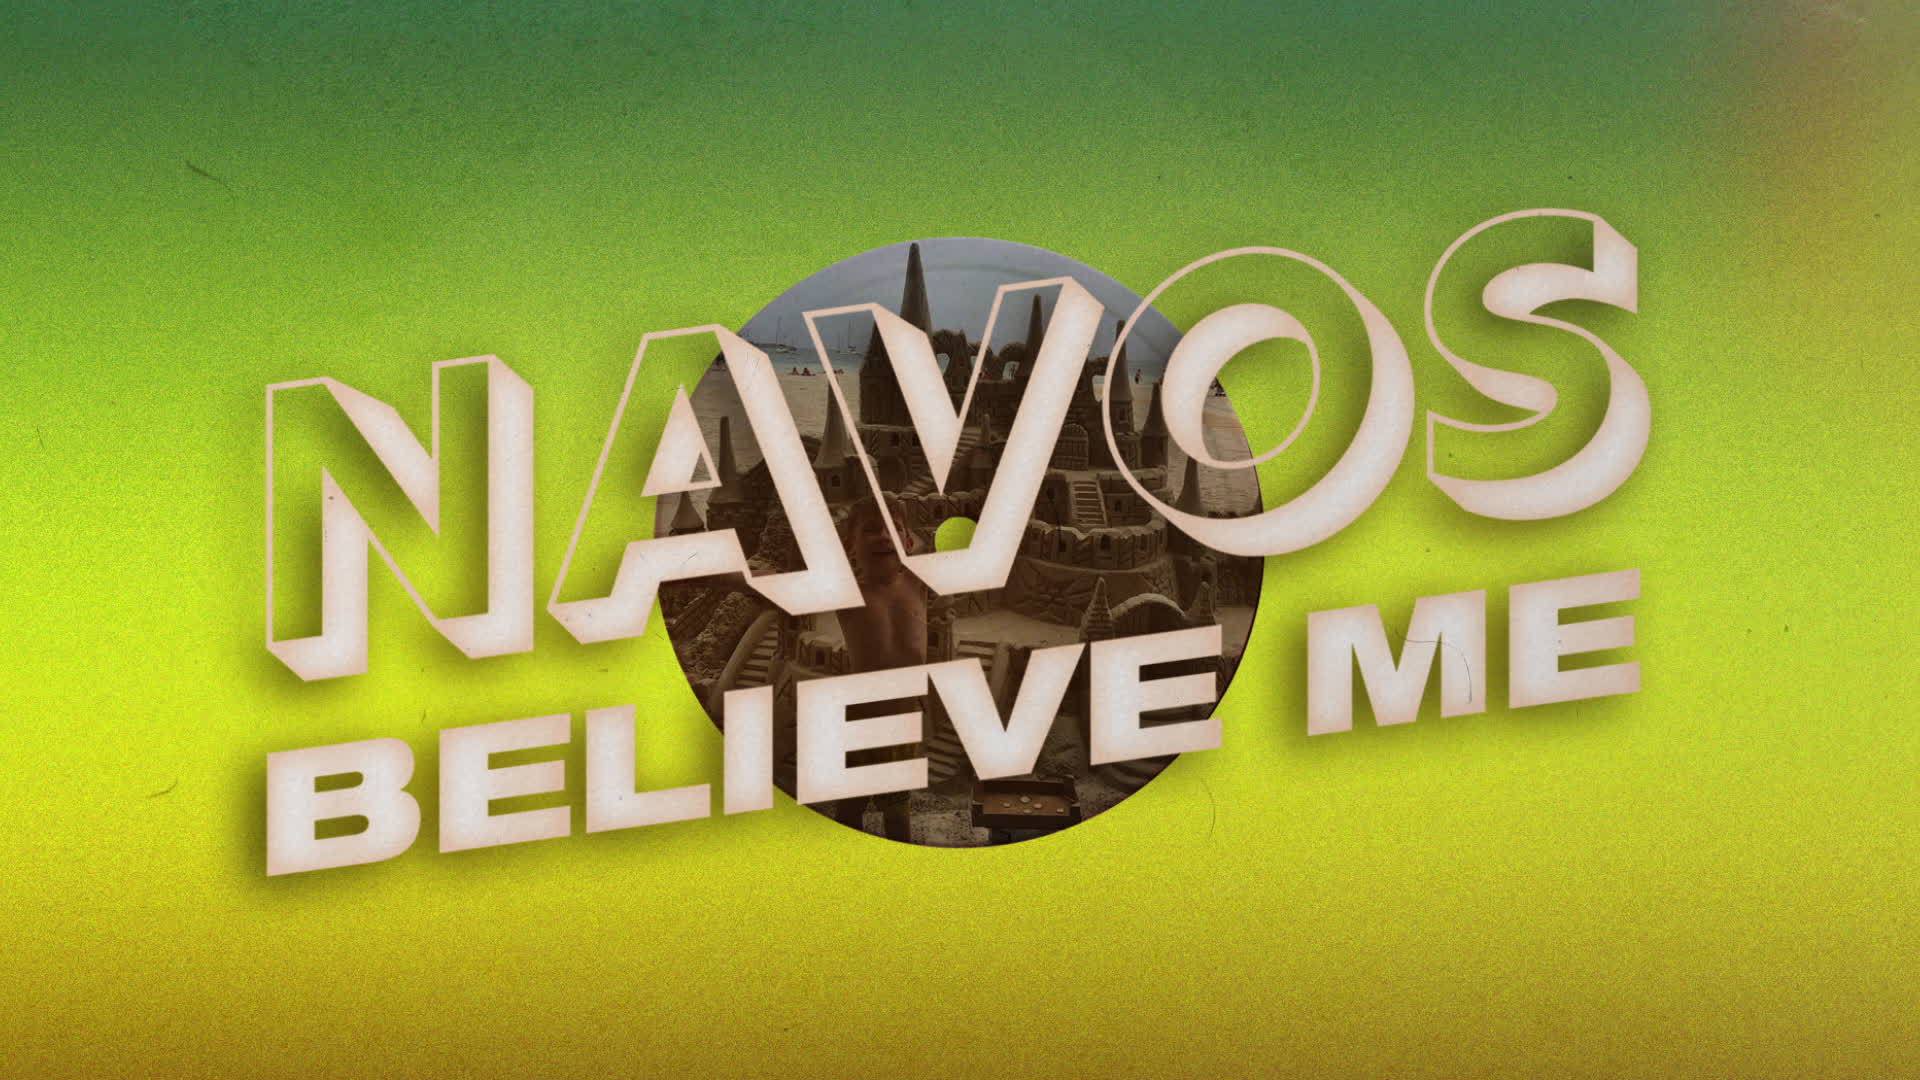 NAVOS - Believe Me (Holiday Visual)